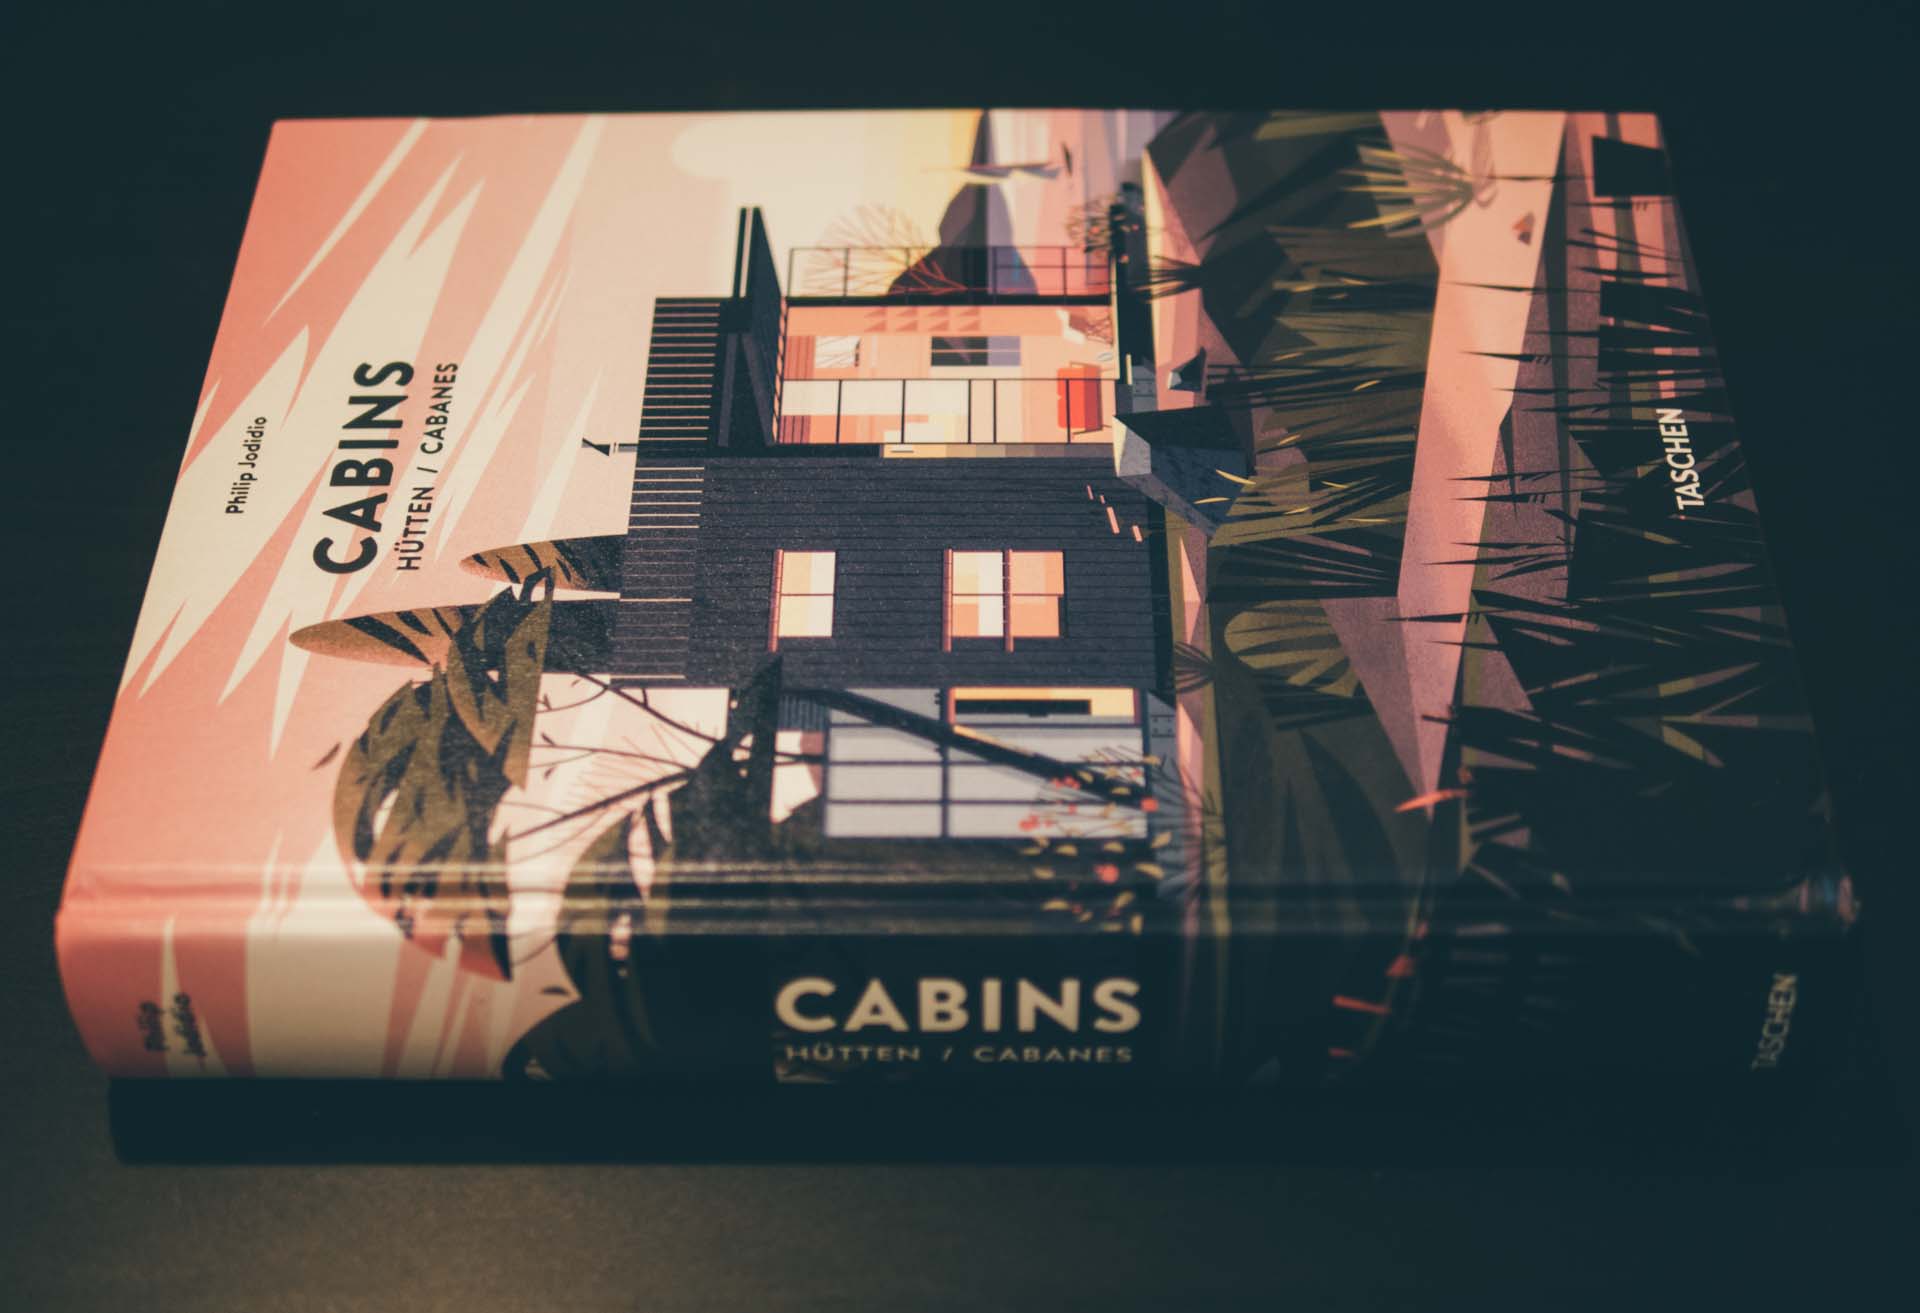 Cabins by Philip Jodidio